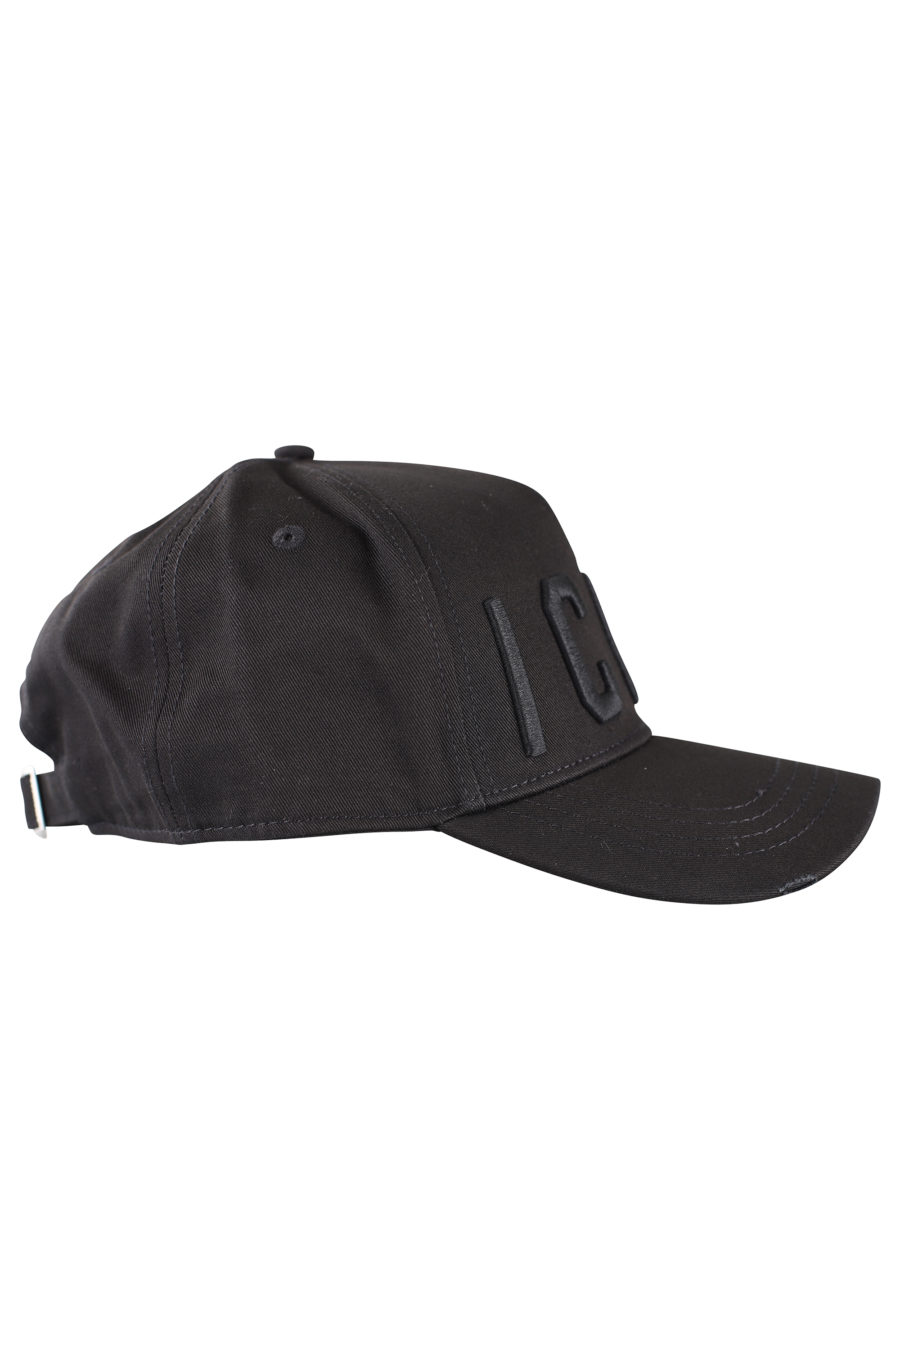 Adjustable black cap with black "icon" logo - IMG 9969